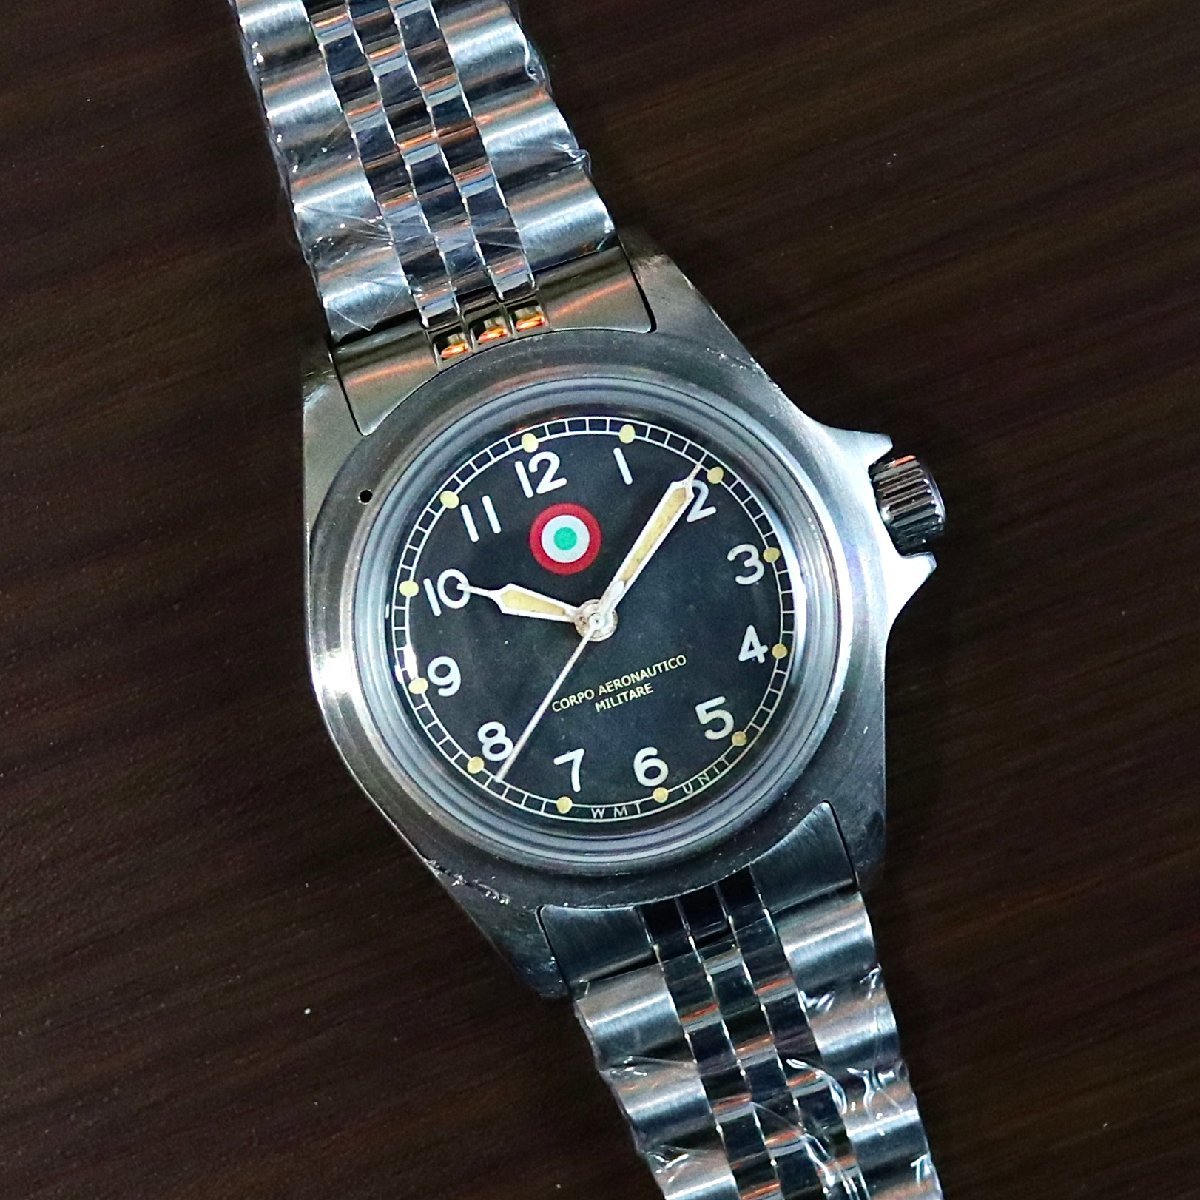 [Wmt Watch] Corp Aeronautico Militore / R.M.1950 5links Браслет / часы модного бренда.